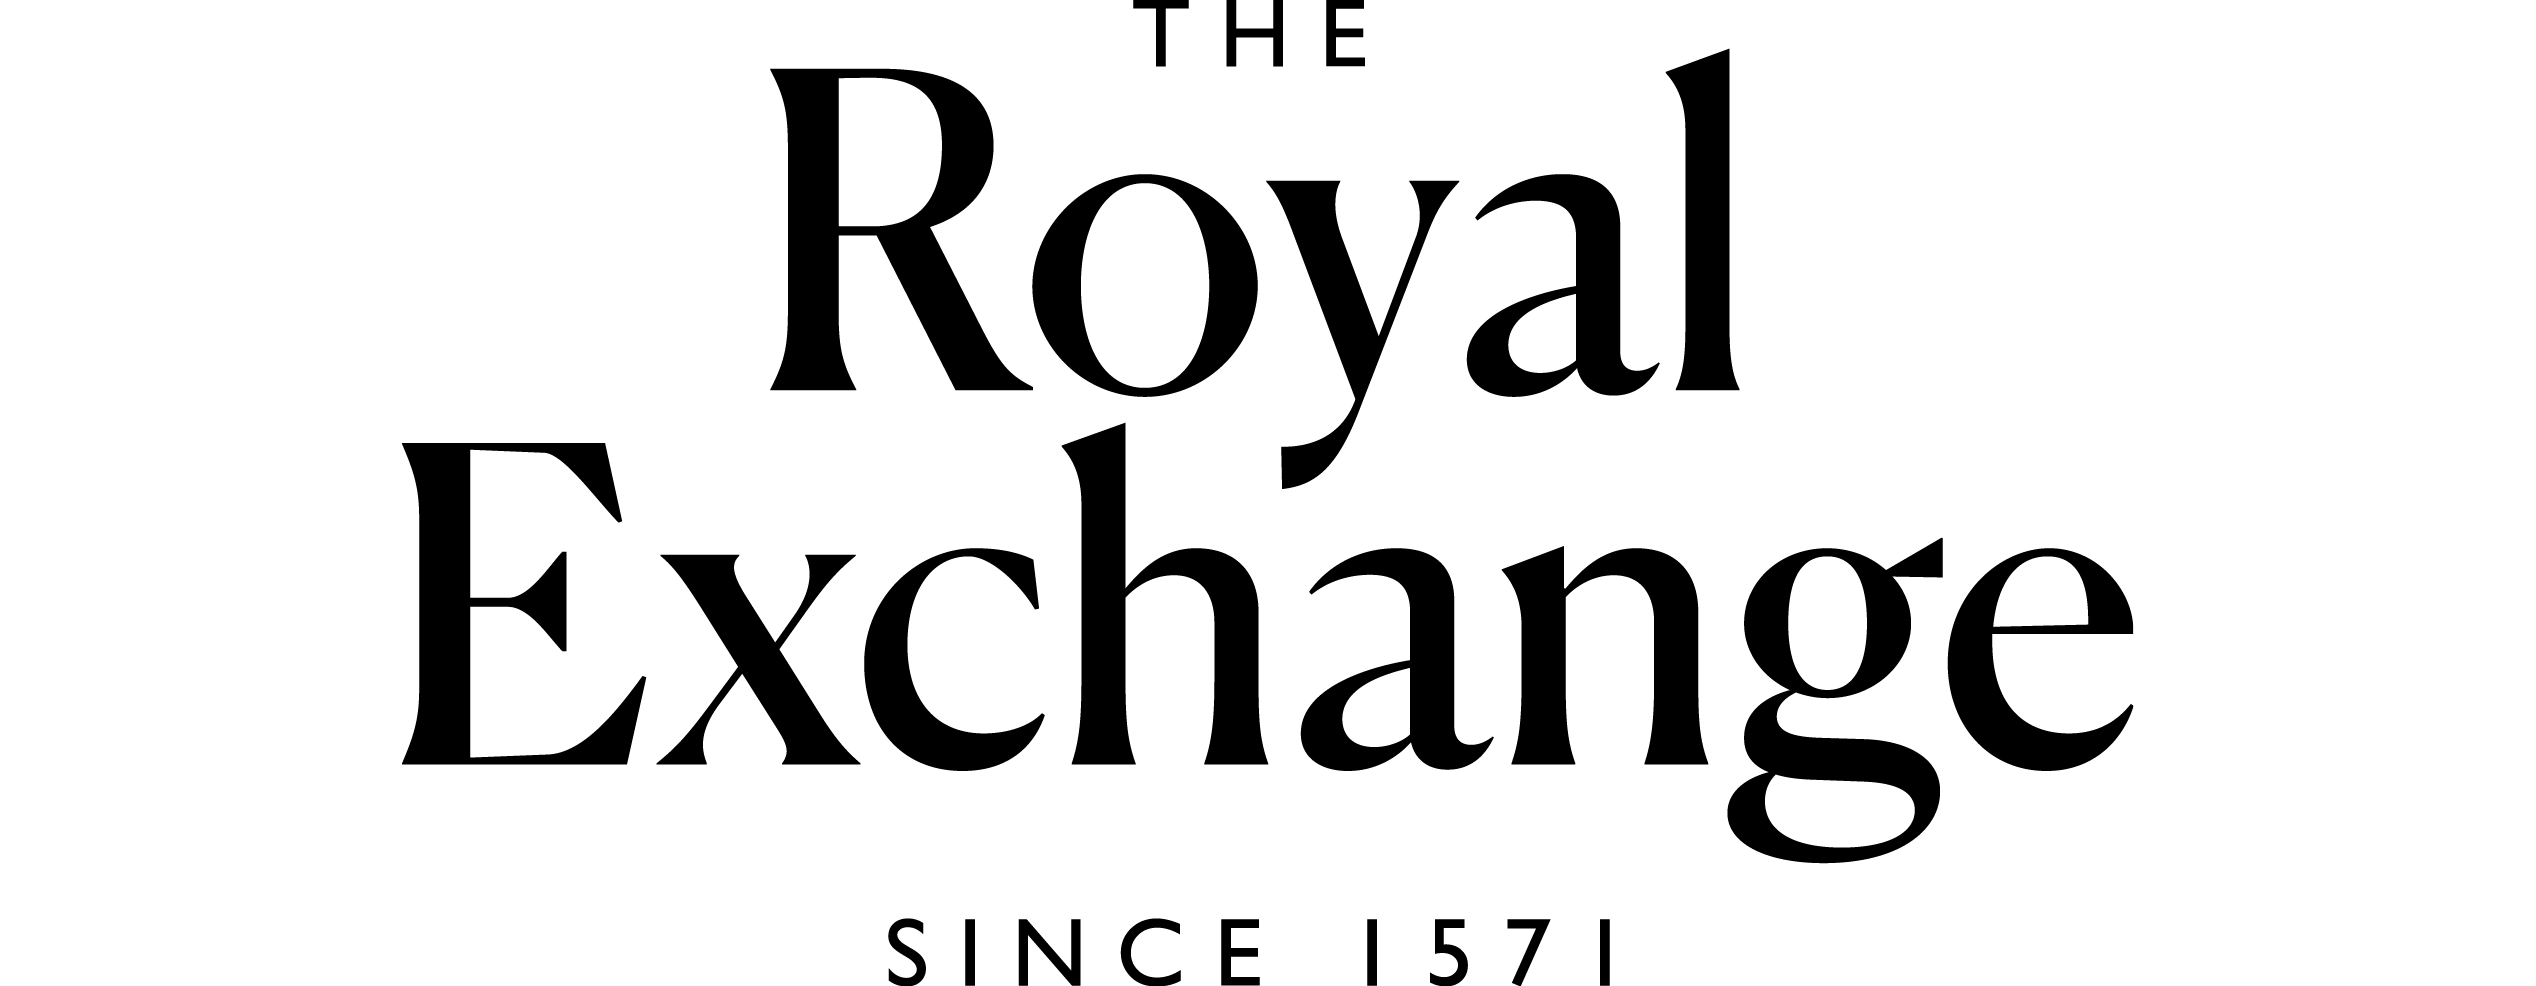 The Royal Exchange logo